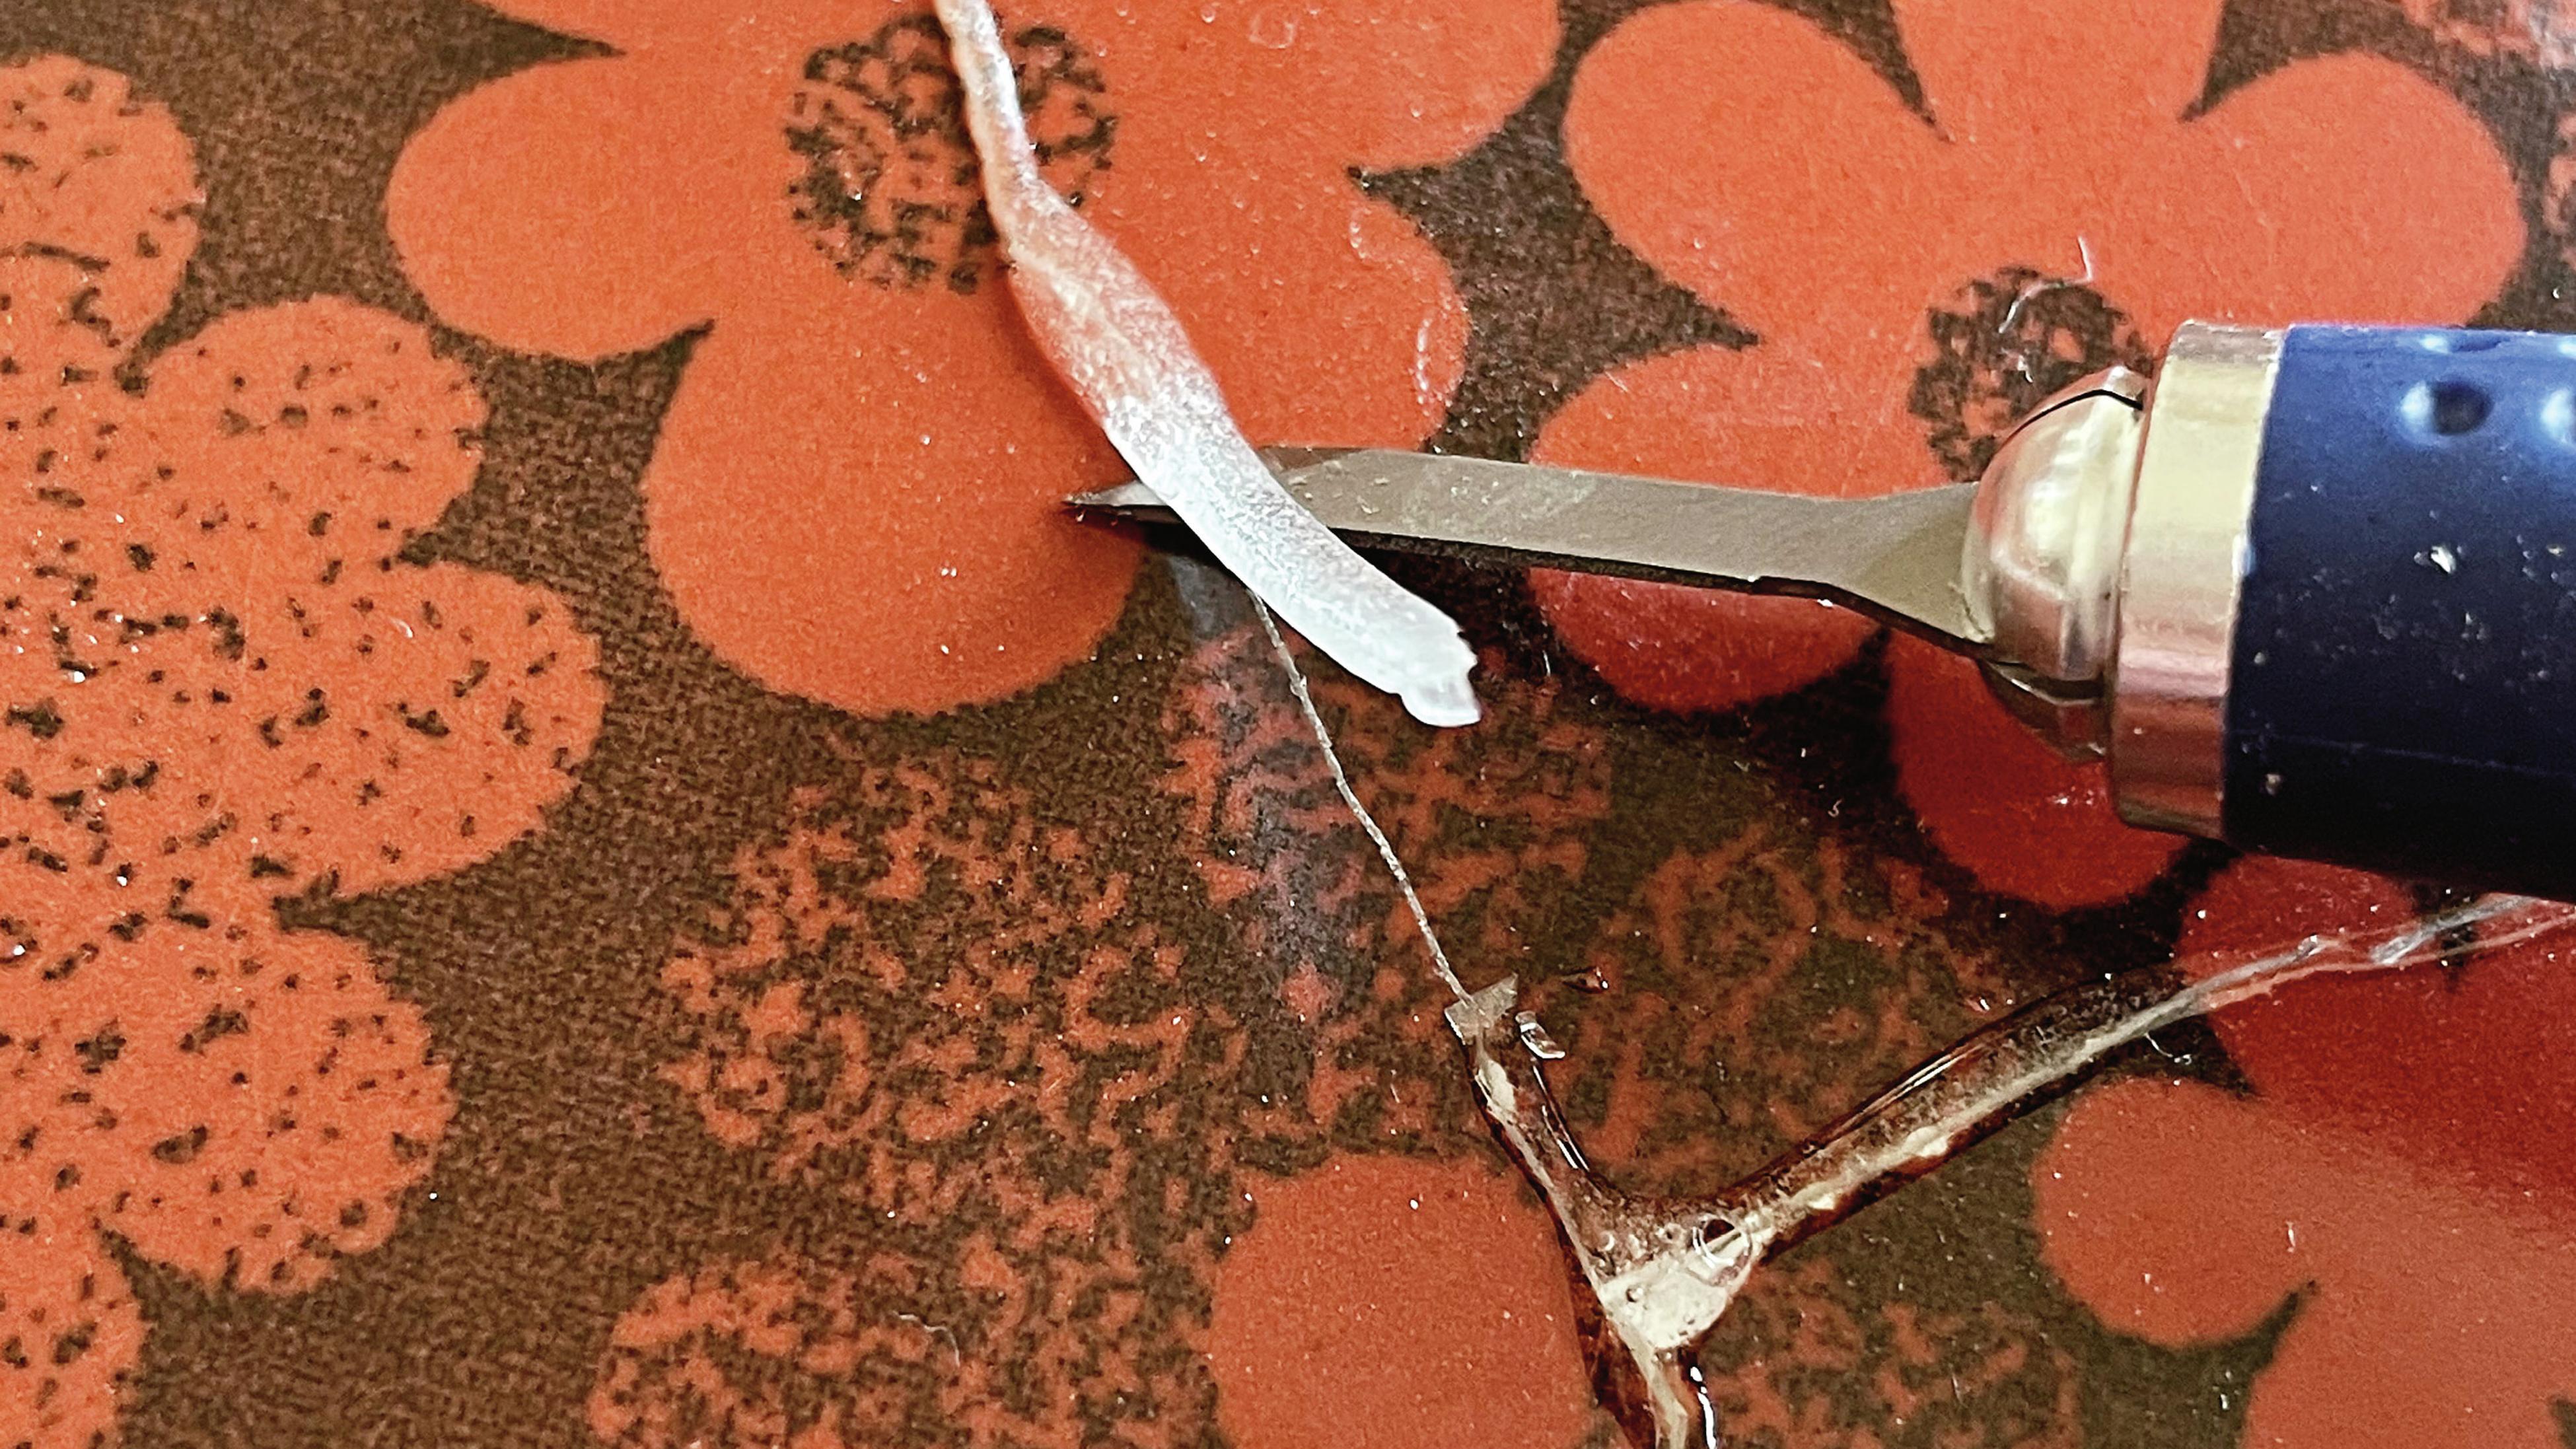 How To Repair Broken Ceramic With Kintsugi - Bunnings Australia